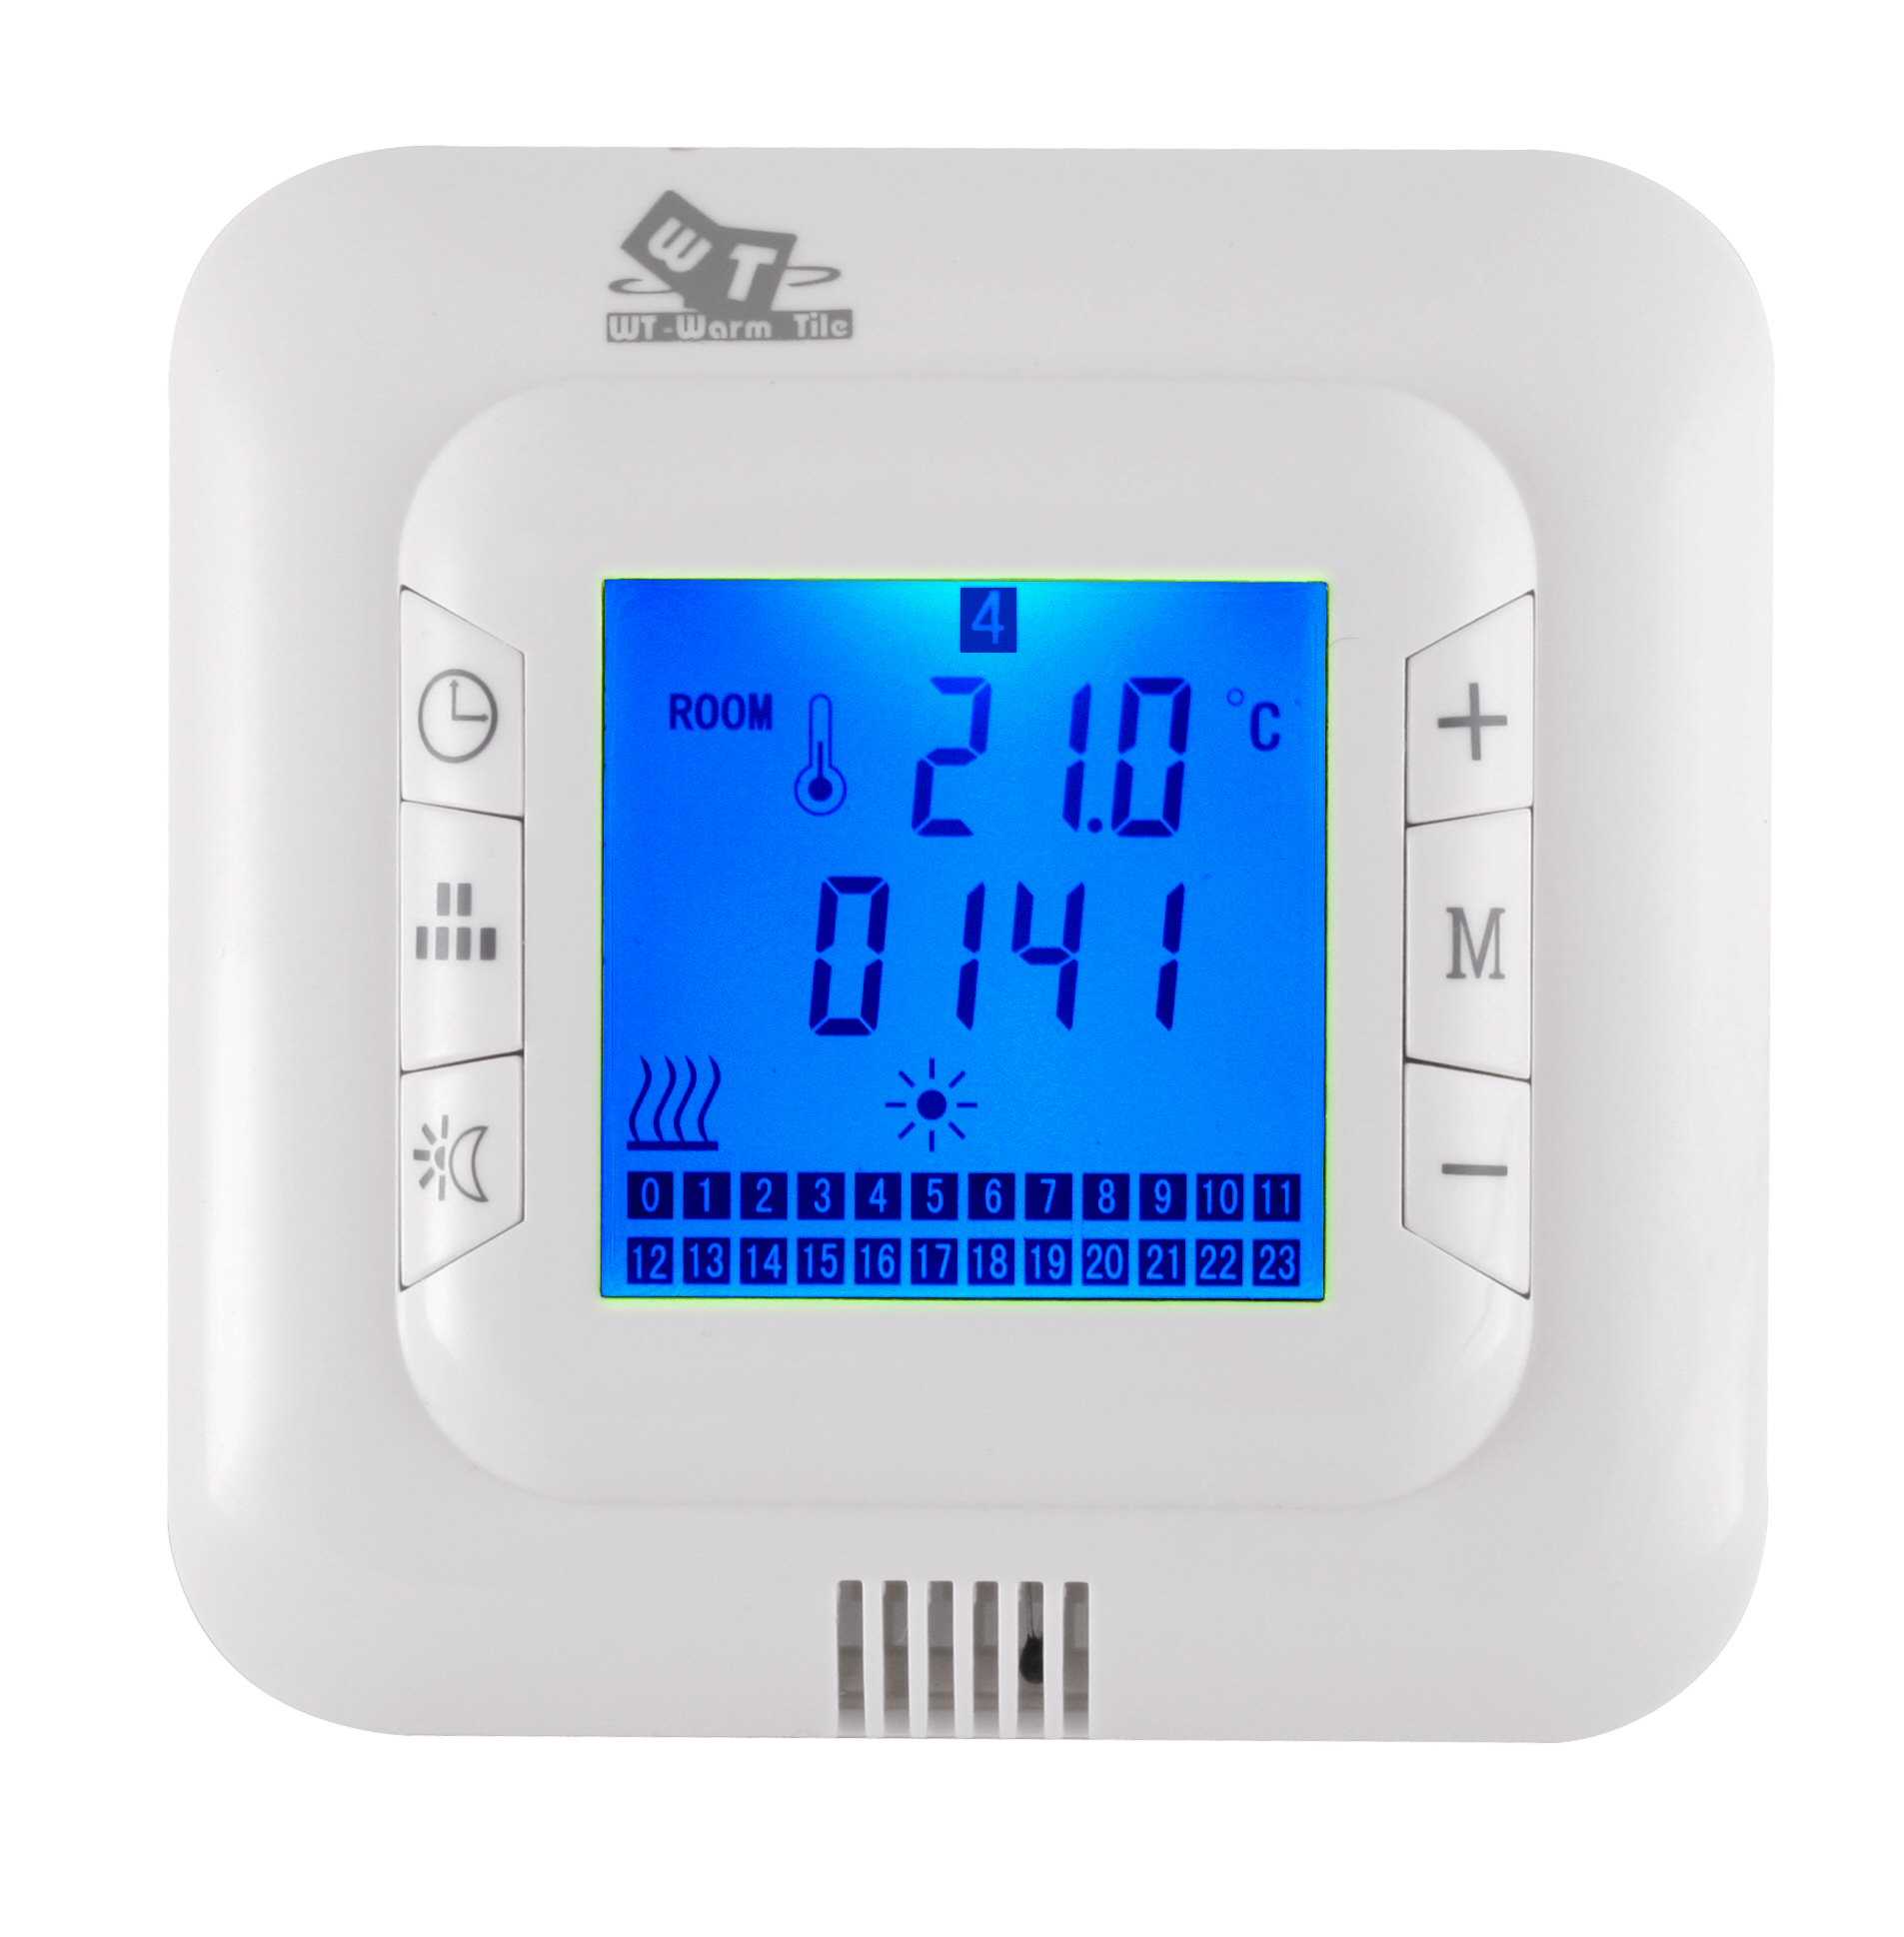 EDRON blau Thermostat
                                  Fussbodenheizung digital Regler